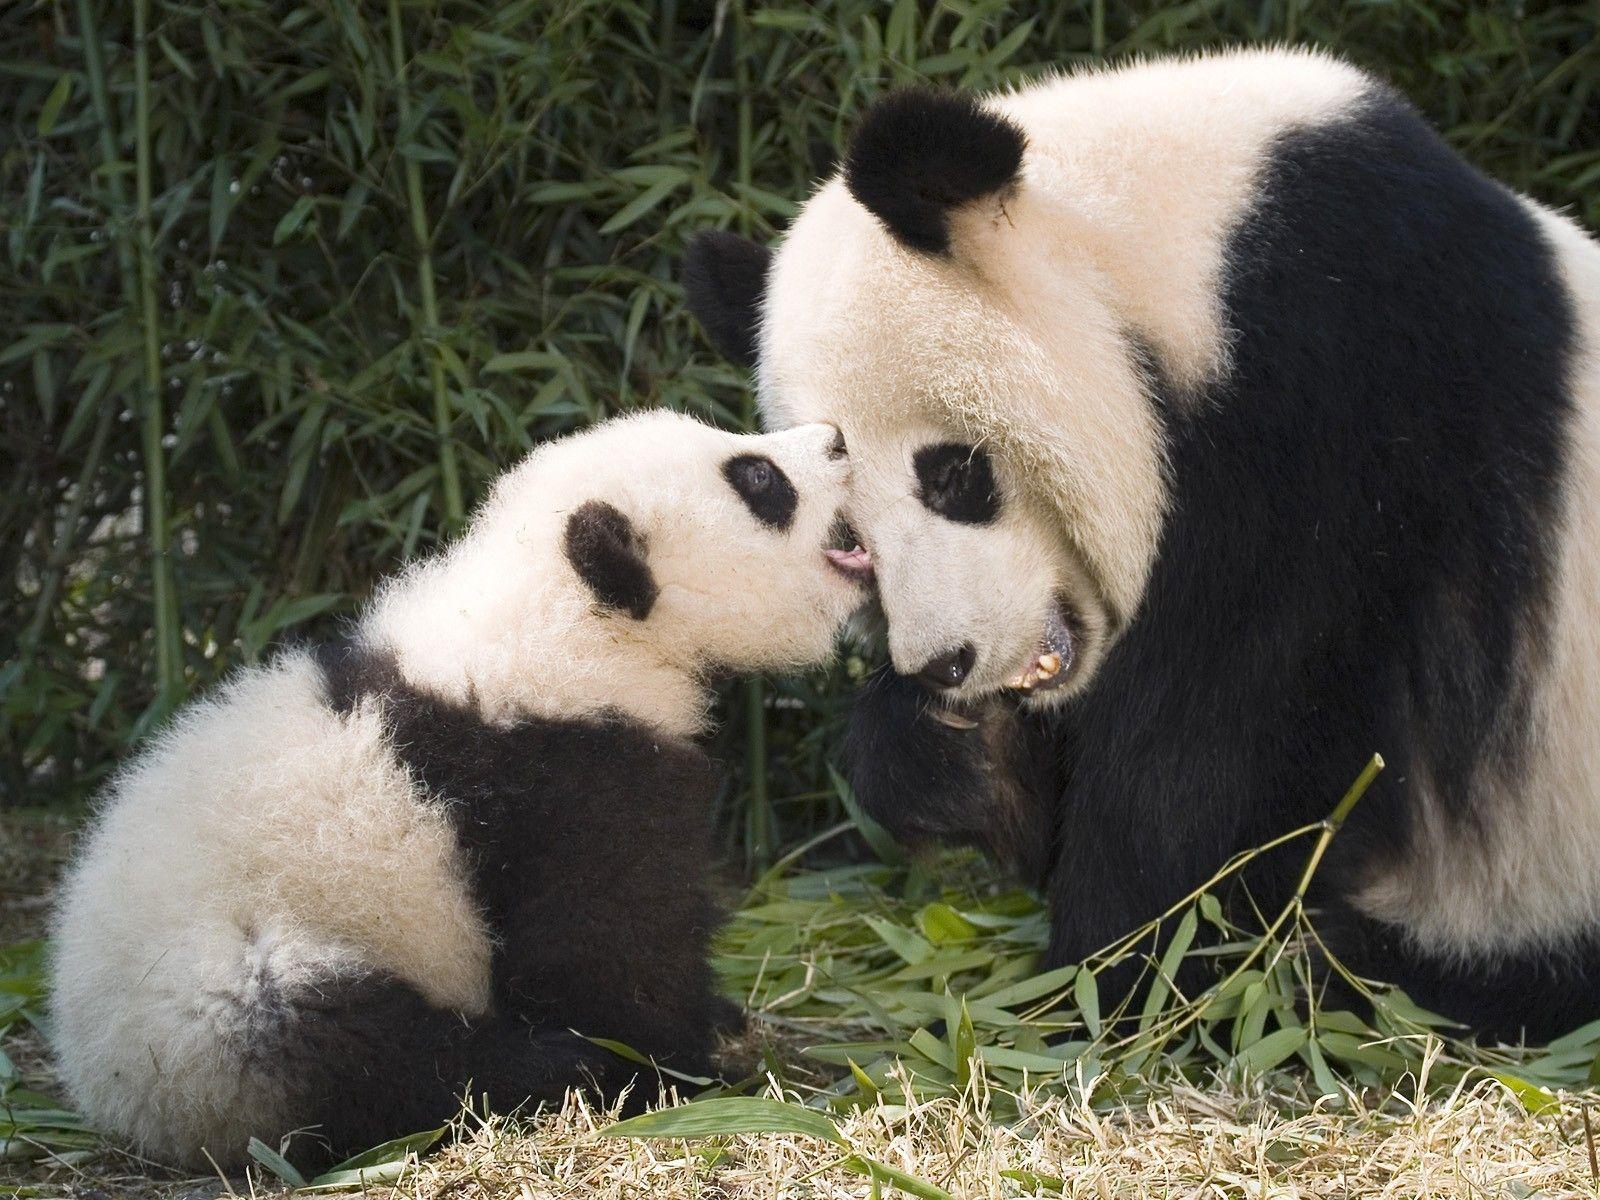 China animals panda bears playing baby wallpaper